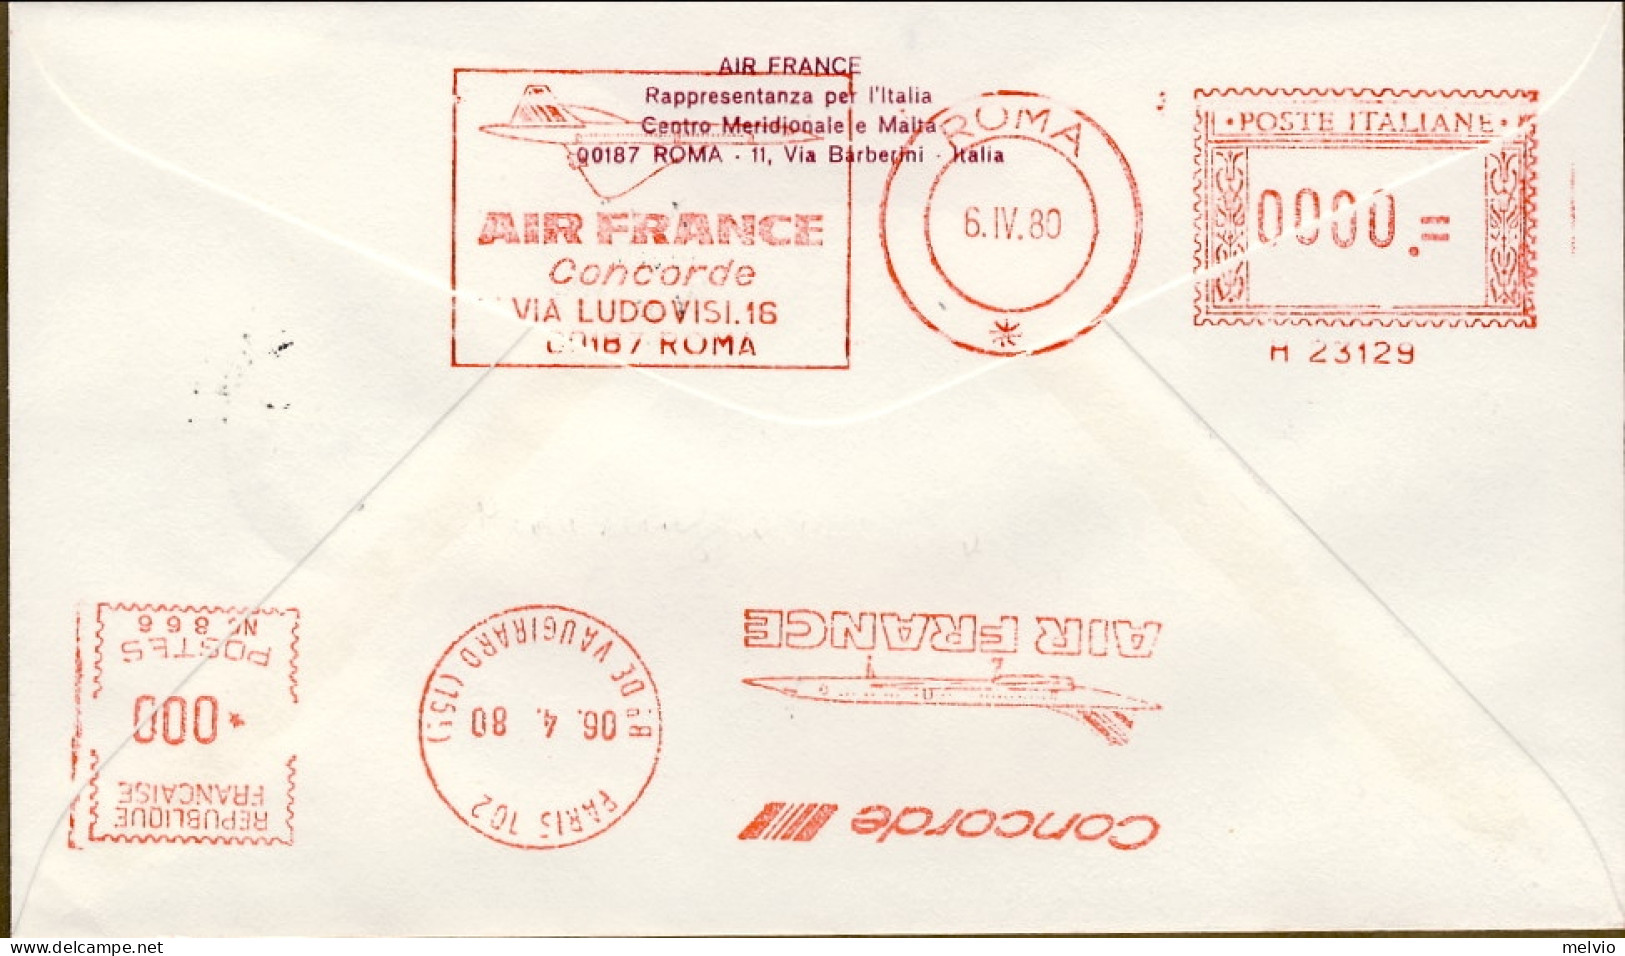 Vaticano-1980 I^volo Airbus Roma Parigi Della Air France - Airmail